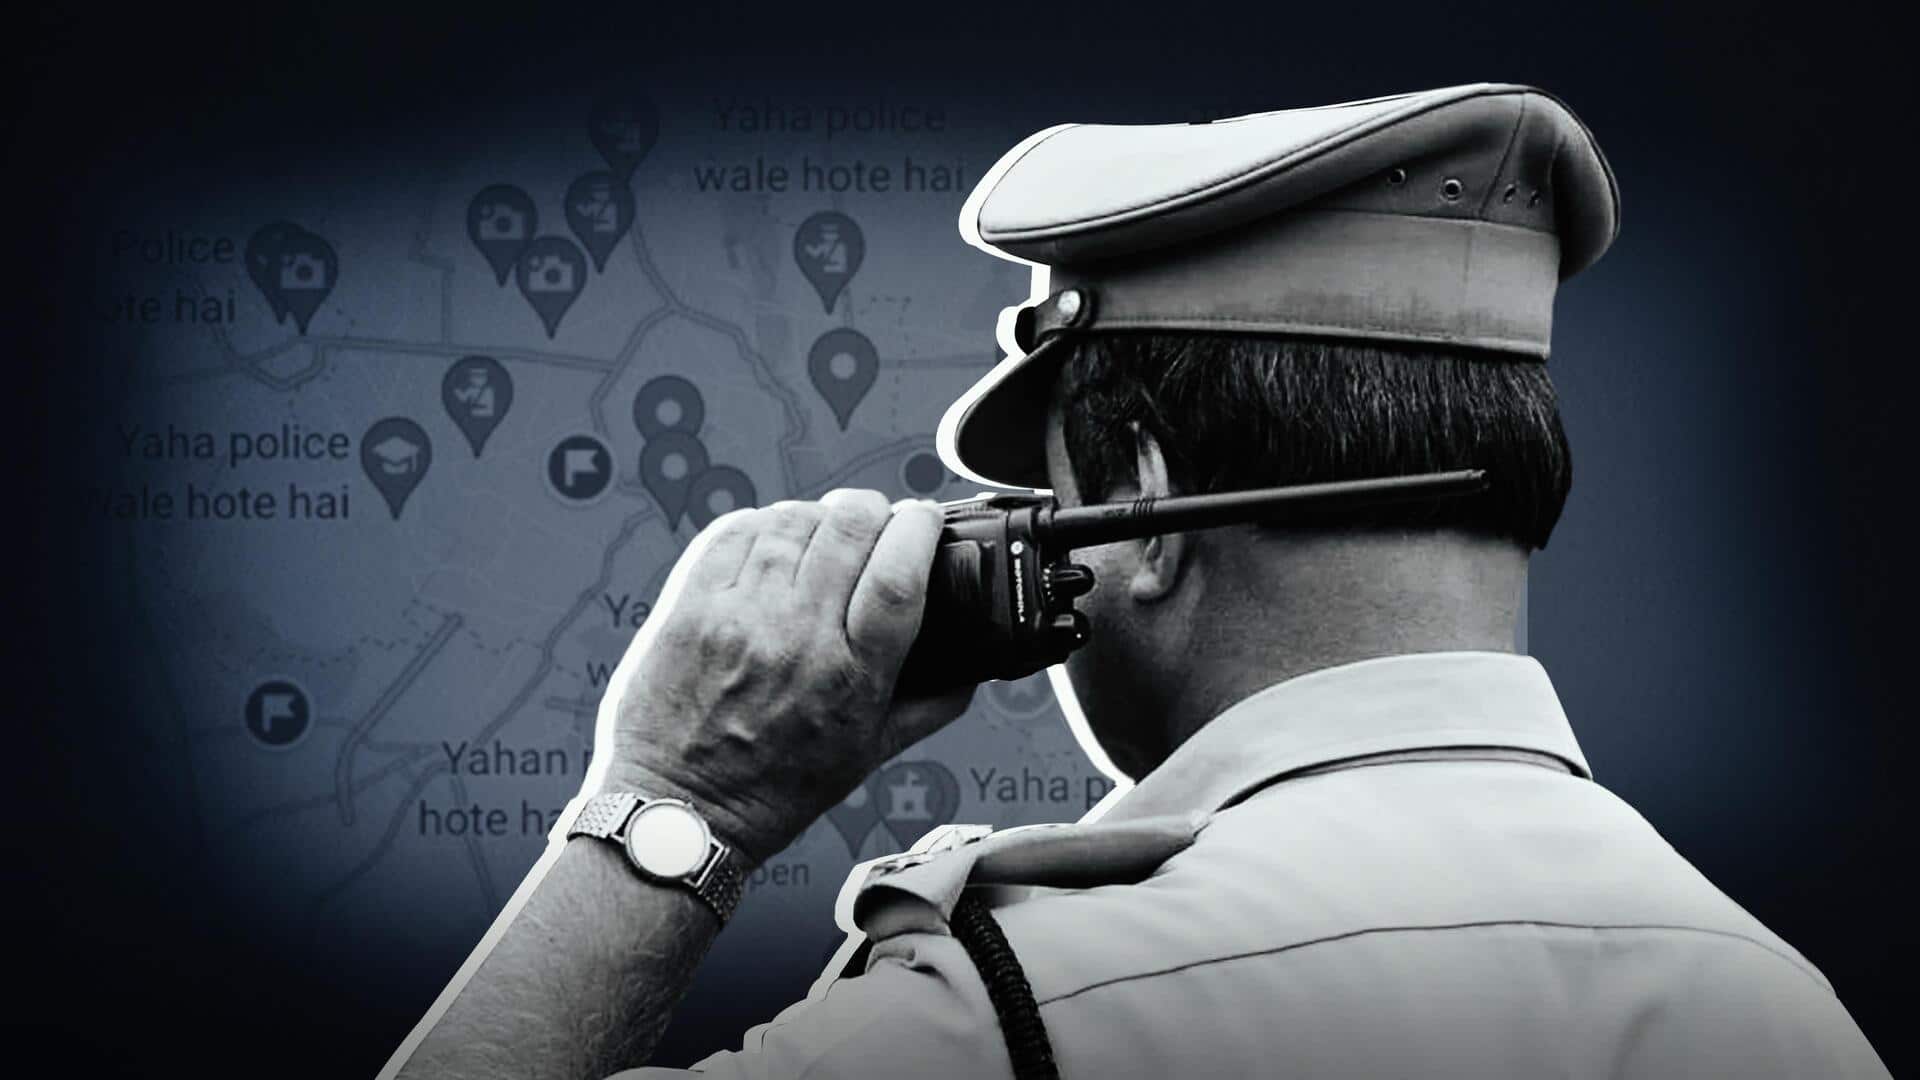 Delhiites mark 'Yaha police wale hote hai' on Google Maps 